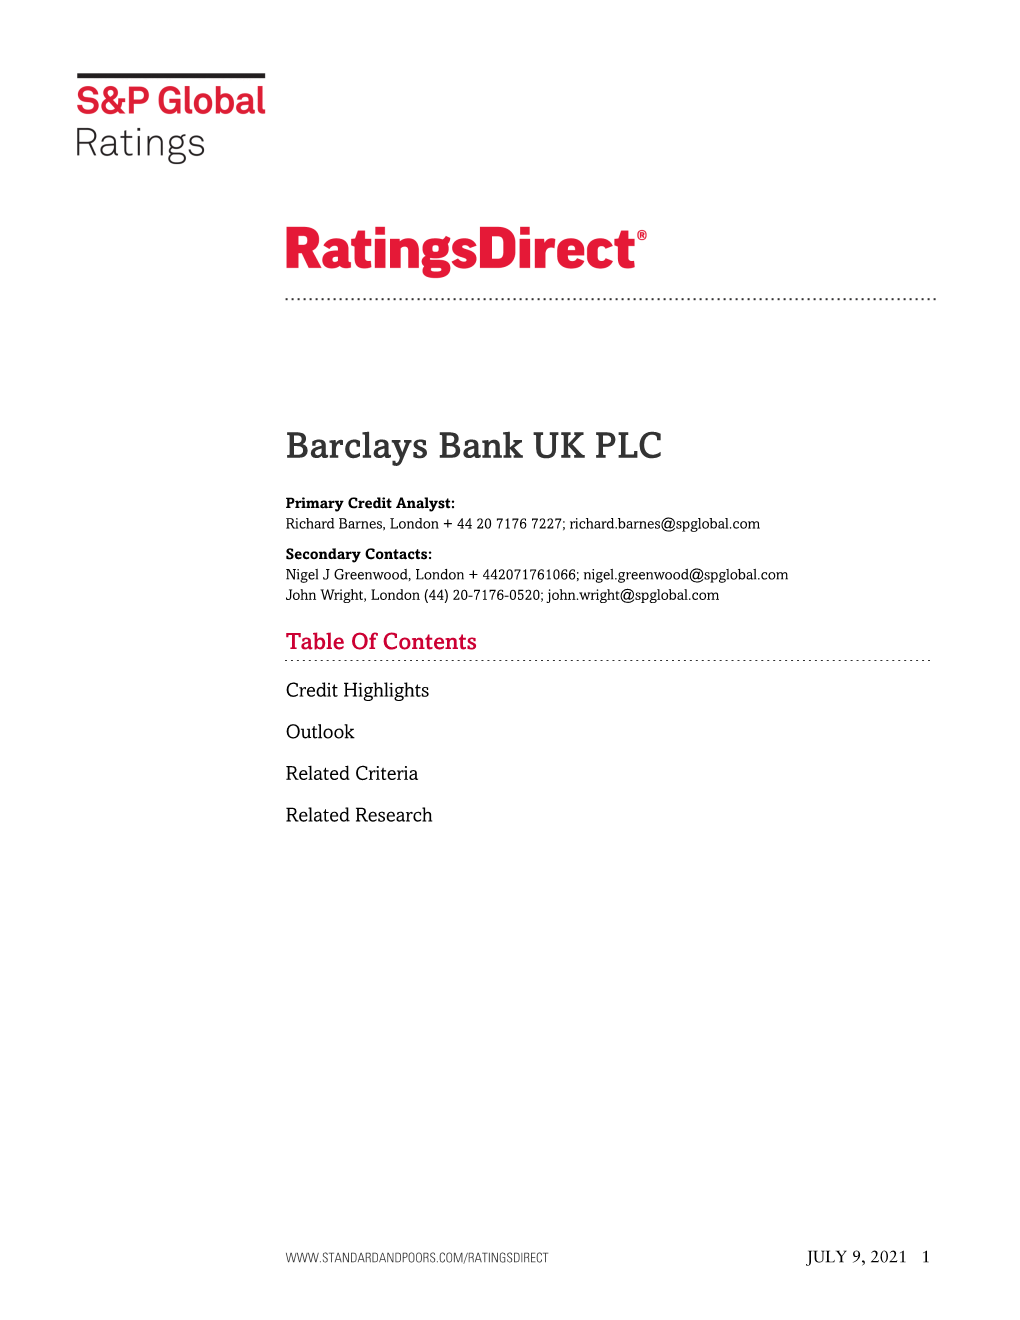 Barclays Bank UK PLC